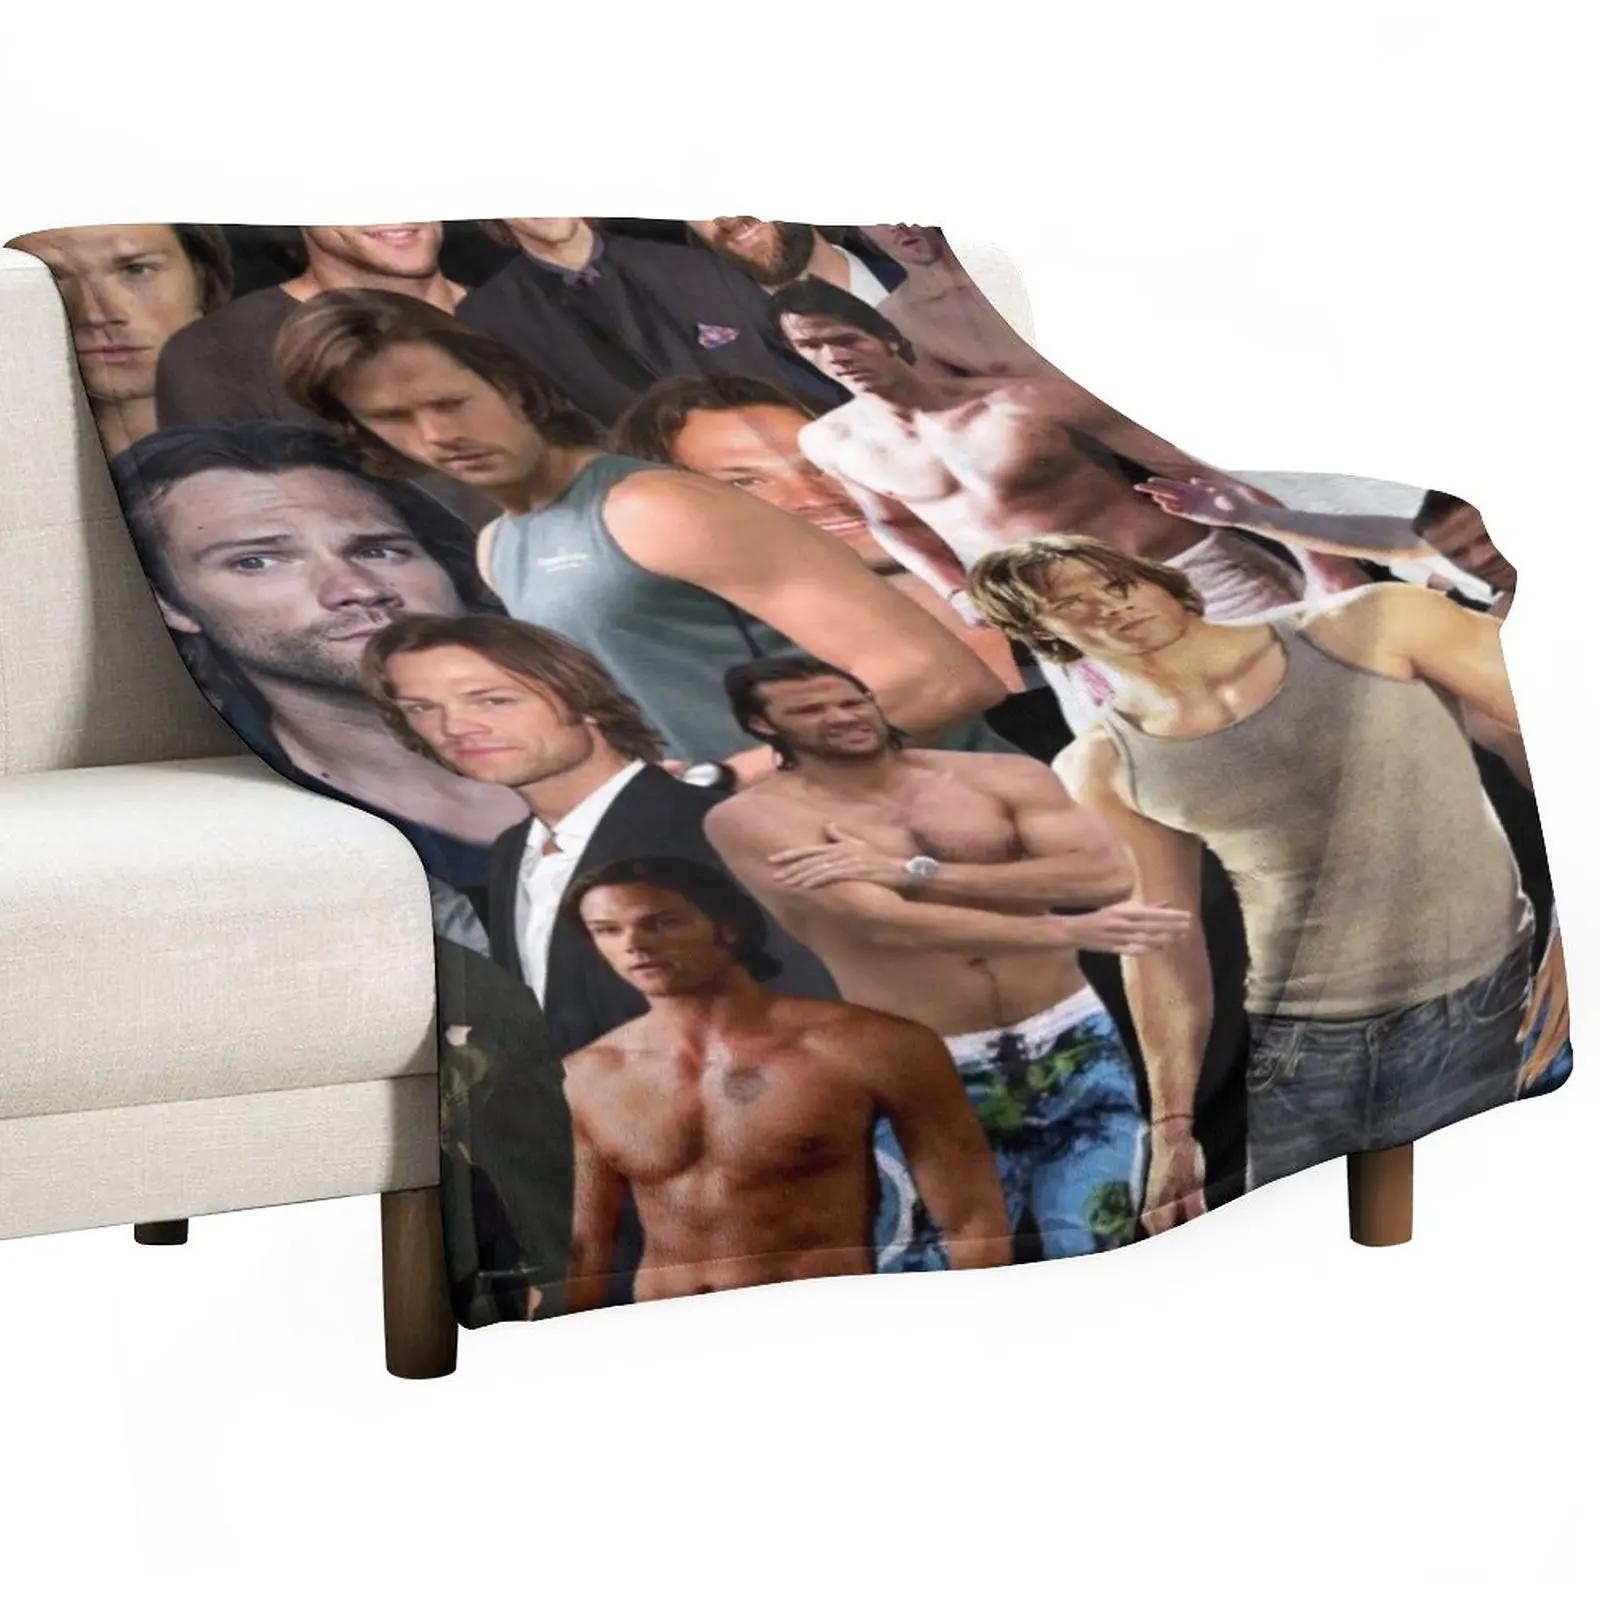 

Jared padalecki фотоколлаж плед на диван одиночное одеяло